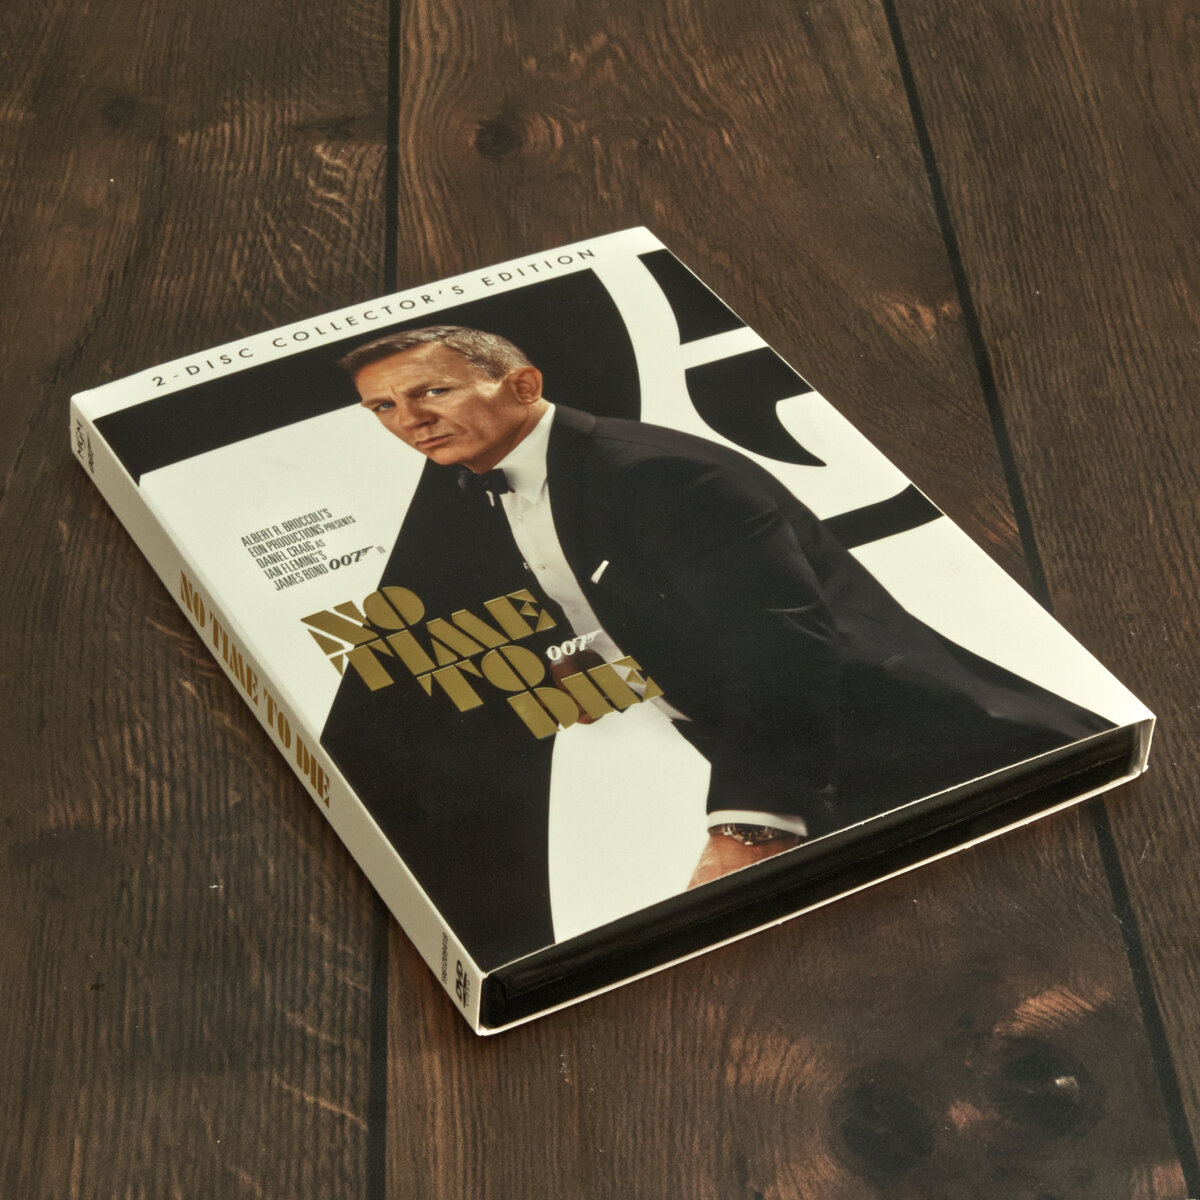 James Bond 007, No Time To Die Movie DVD